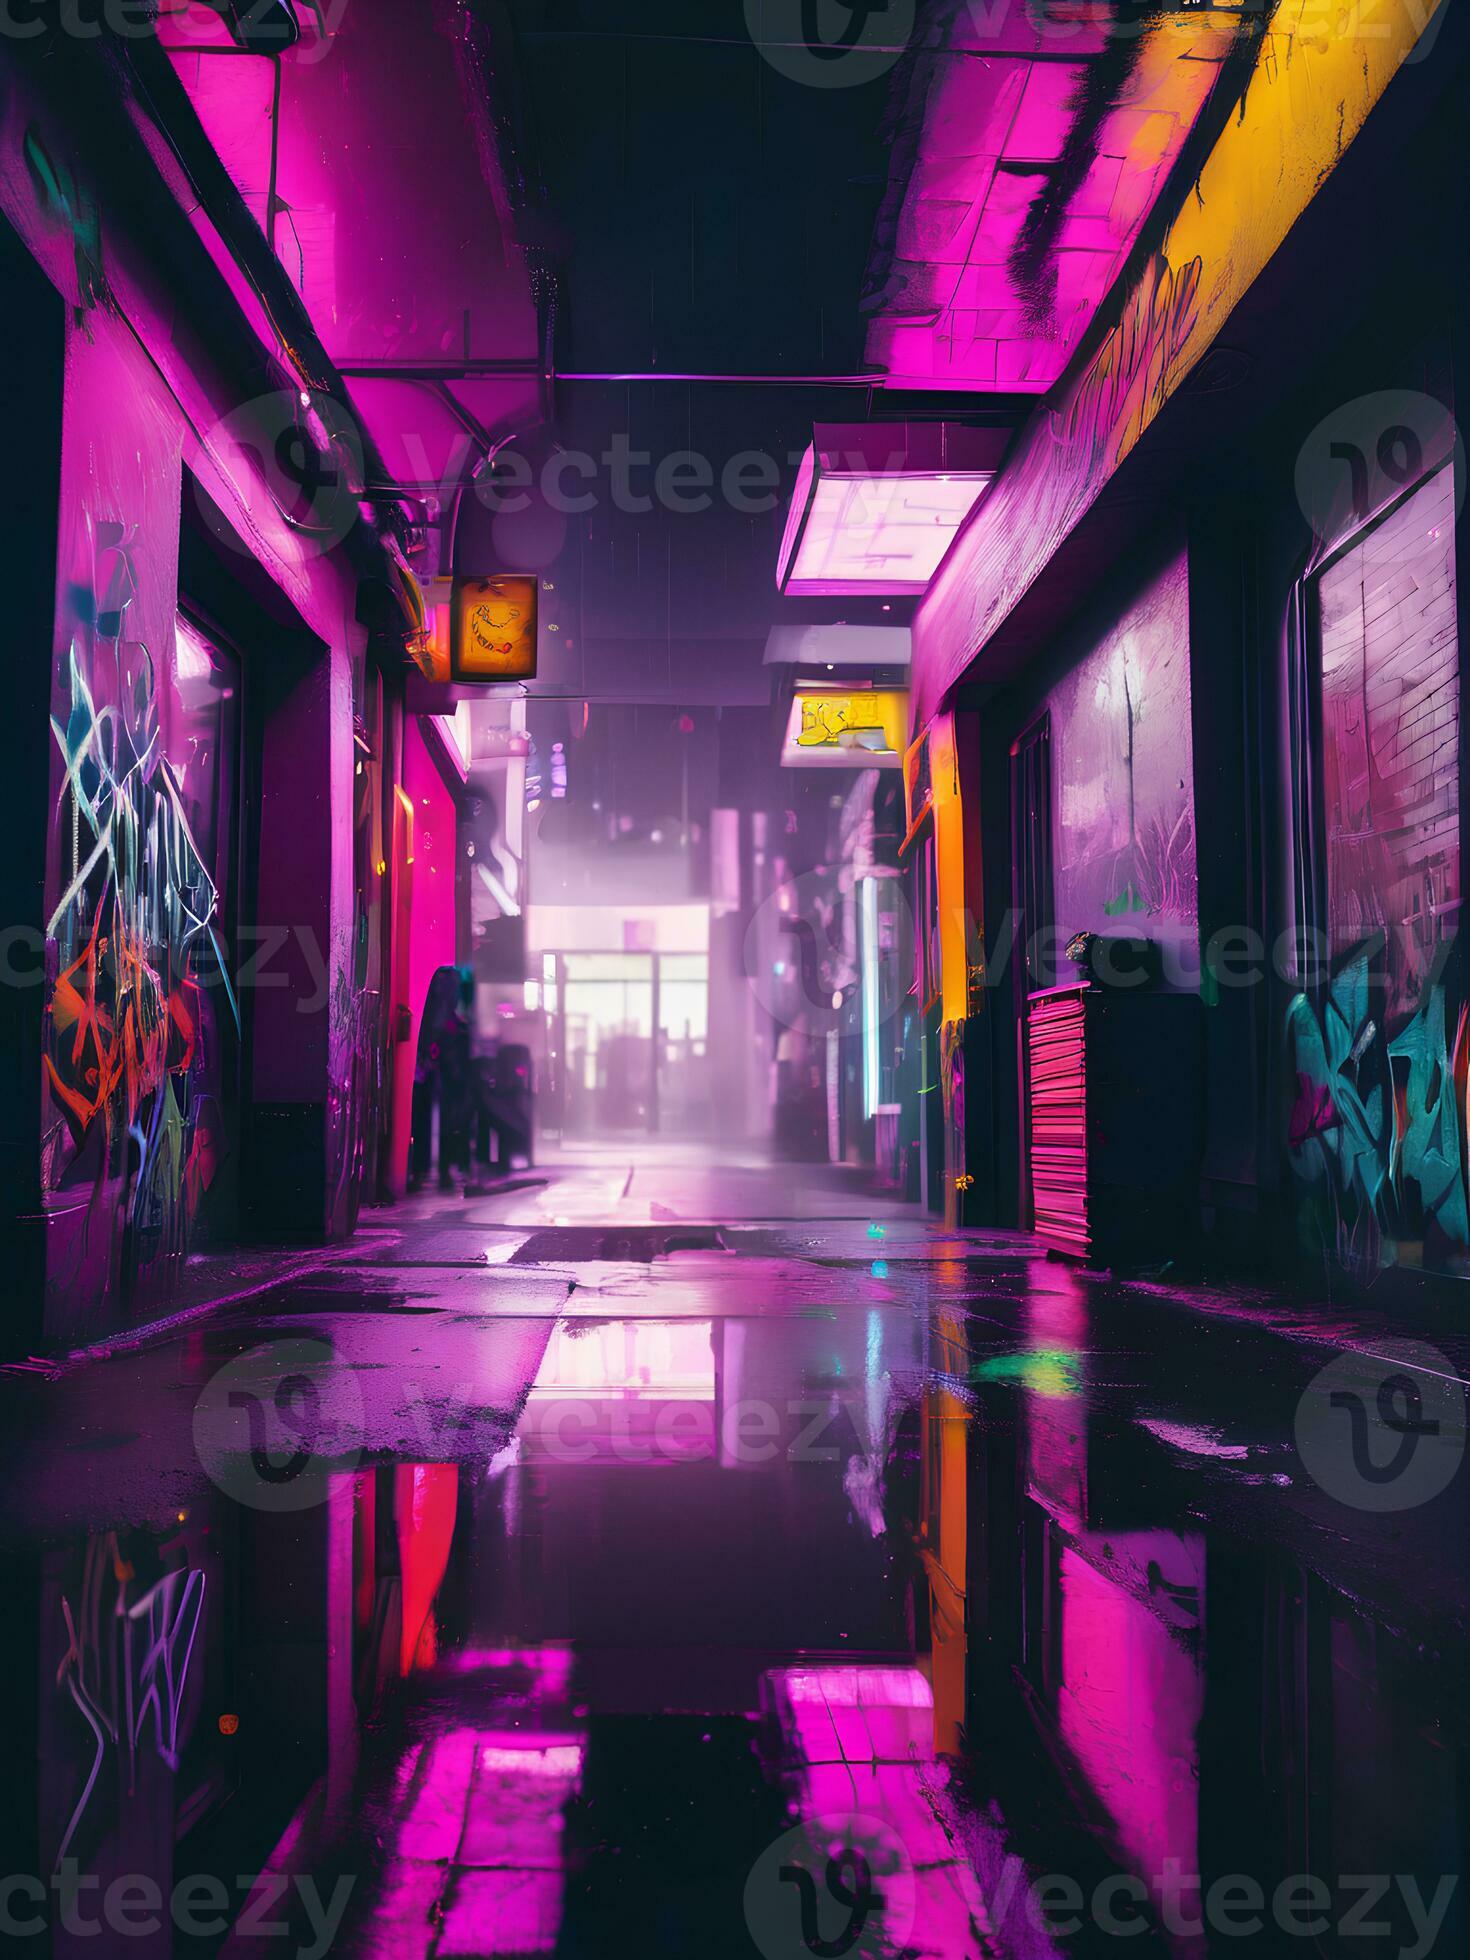 Landscape illustration of neon vaporwave cyberpunk street with graffiti on wall